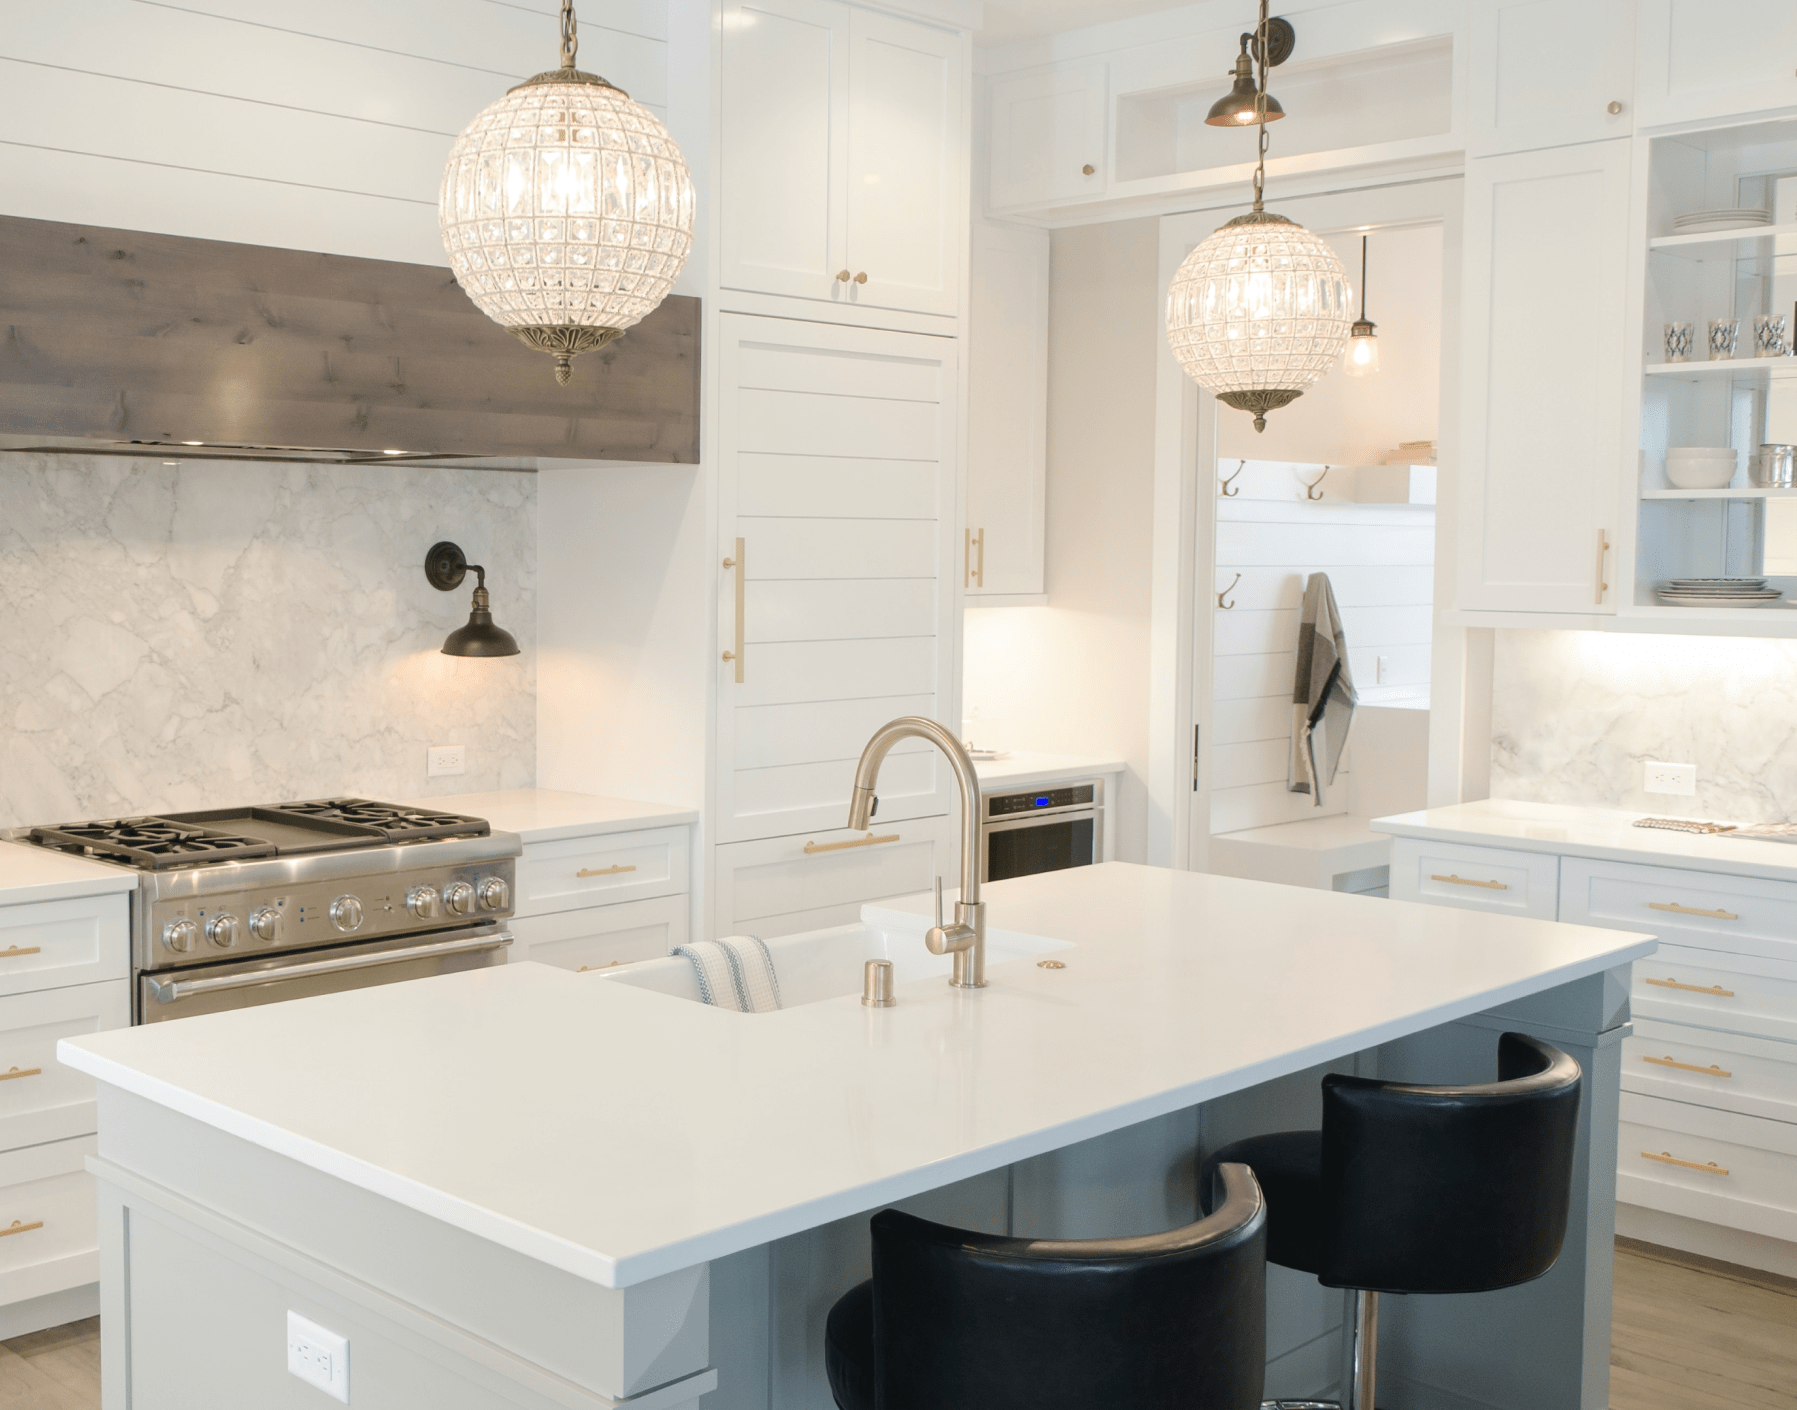 luxury kitchen with ornate lighting